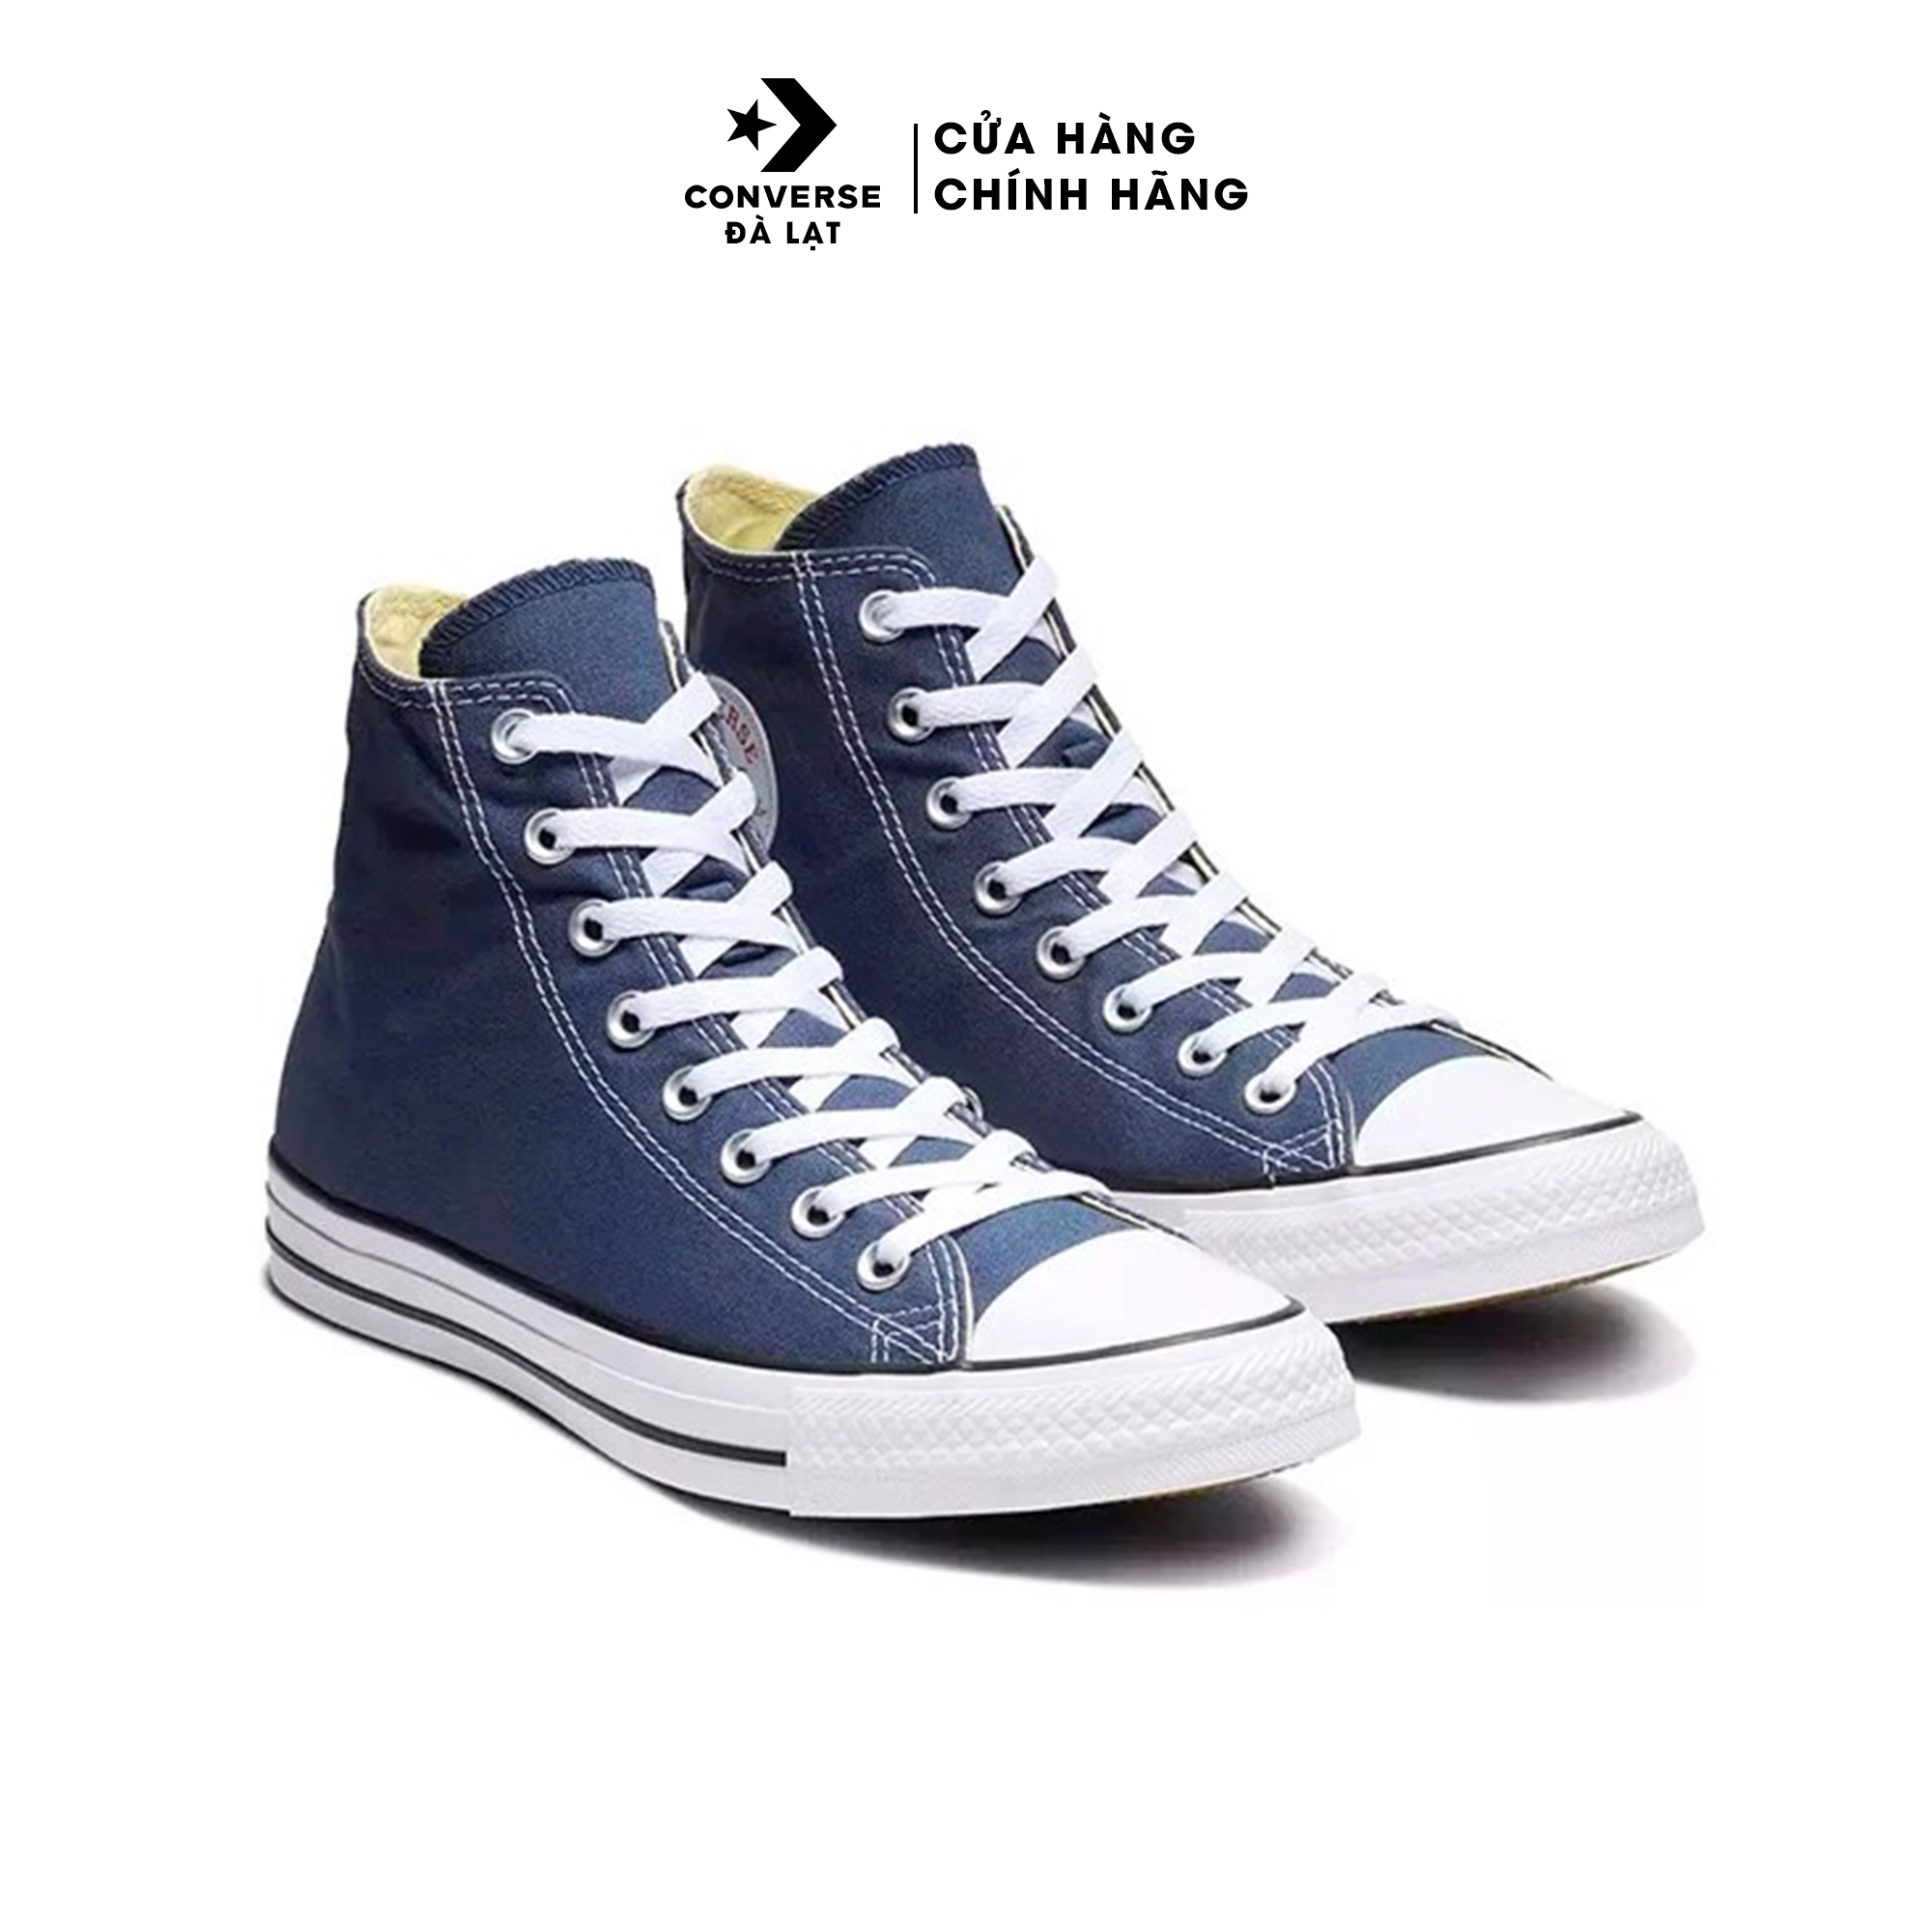 Giày sneakers Unisex cao cổ màu xanh Navy Converse Chuck Taylor All Star  Classic - 127440C 